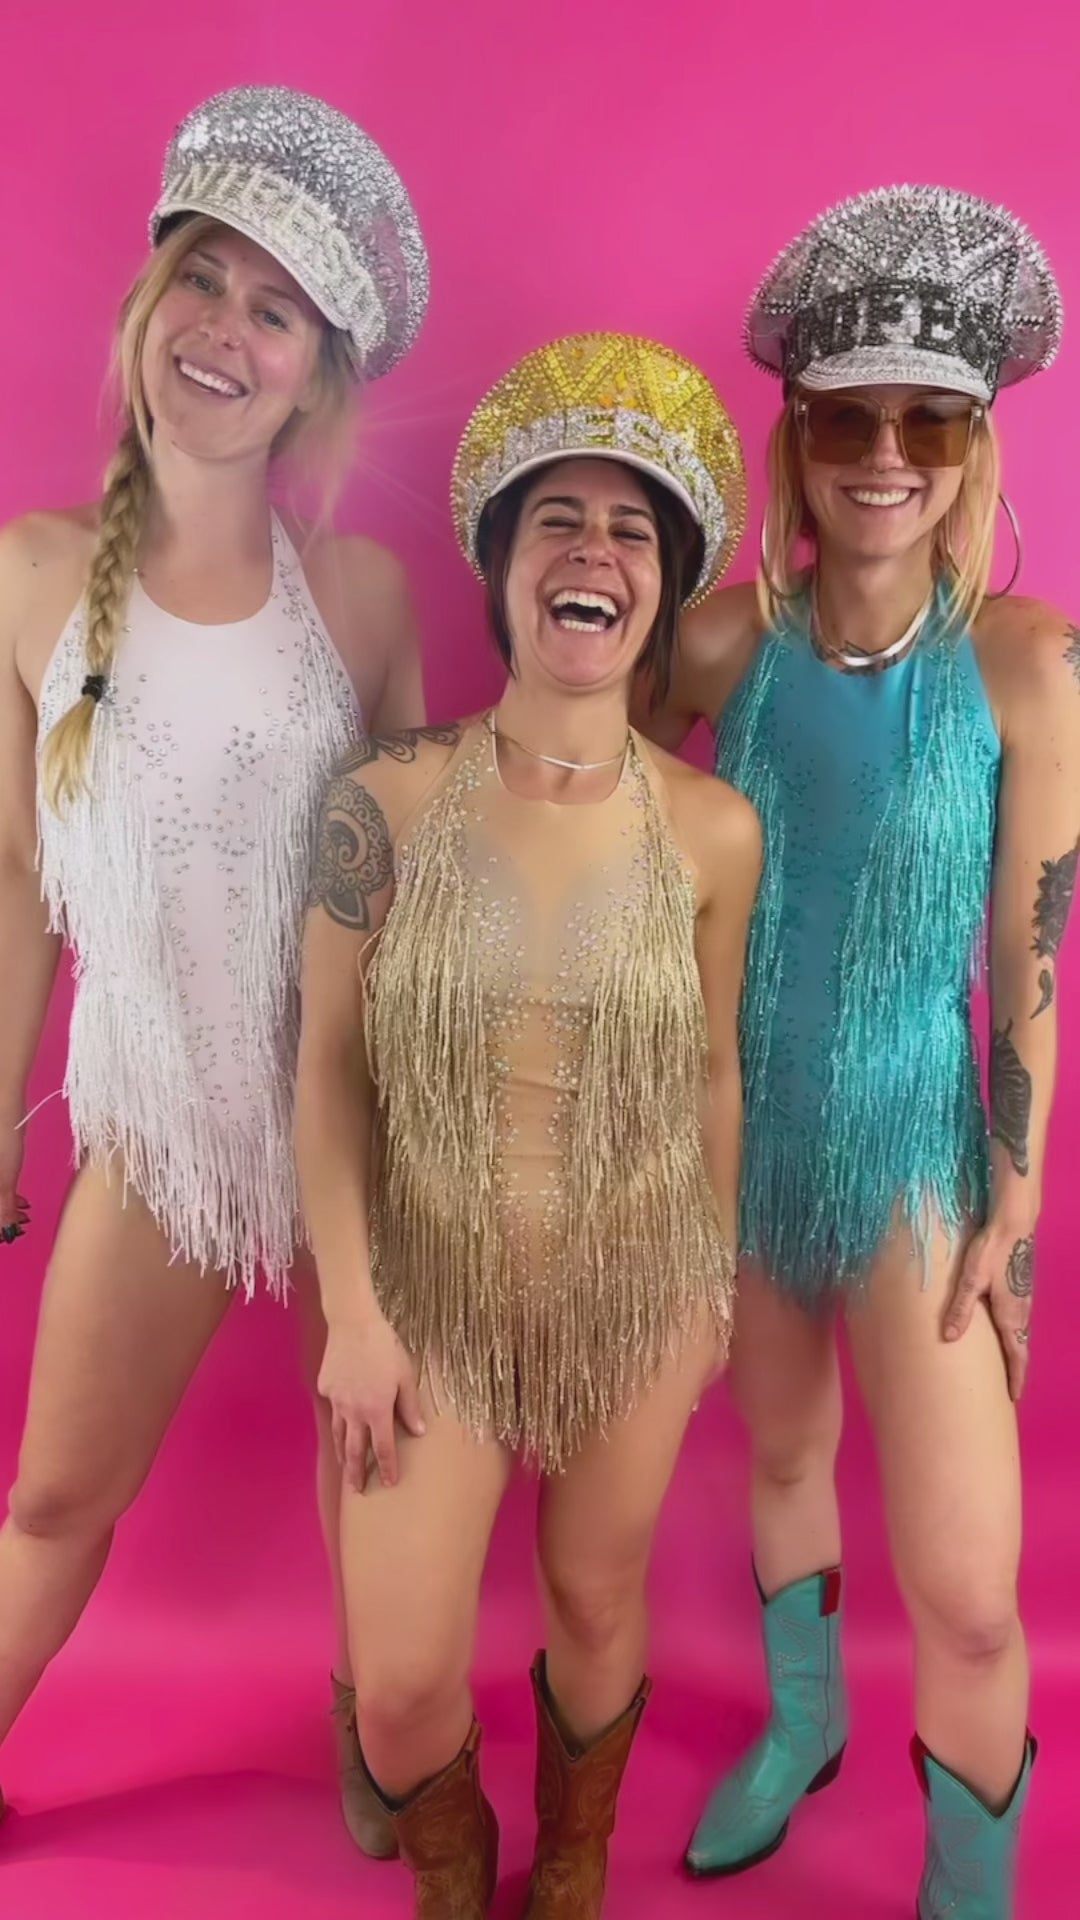 Taylor Rhinestone Bodysuit / White Tassel Festival Outfit / Cabaret New Years Eve Crystal Catsuit Burning Man / Dance Performer Leotard